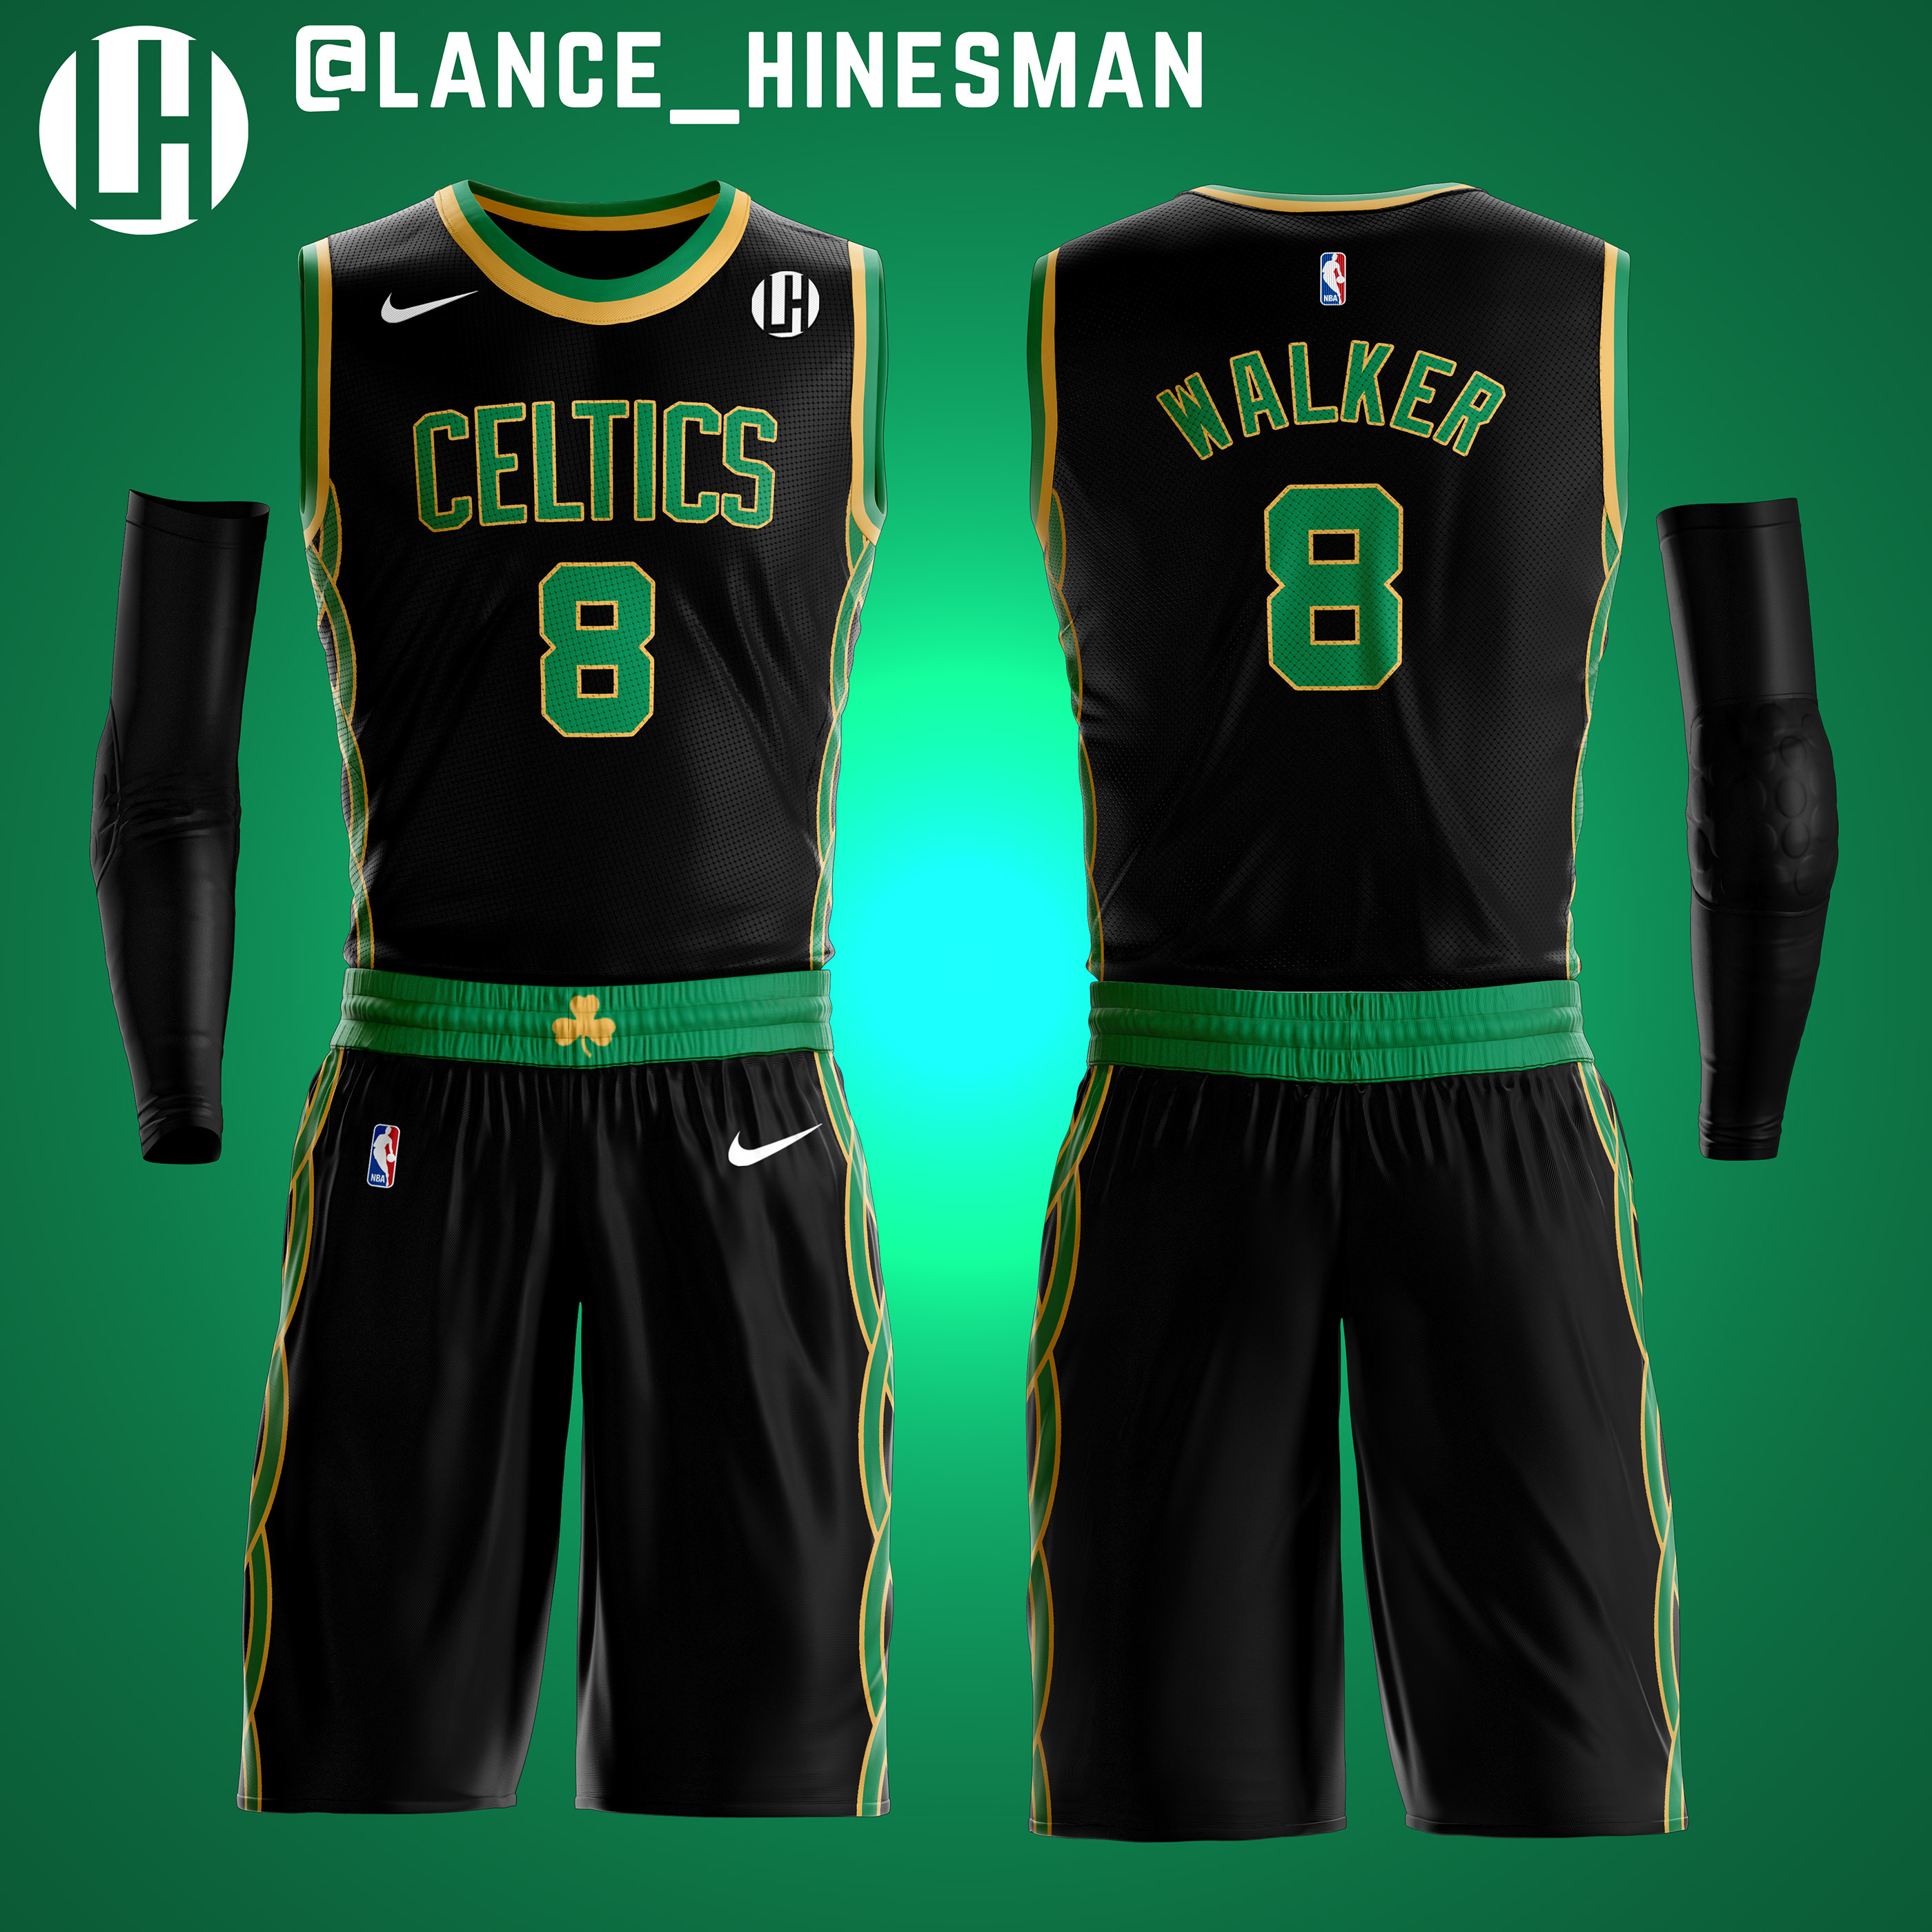 Boston Celtics Jersey Concepts on Behance